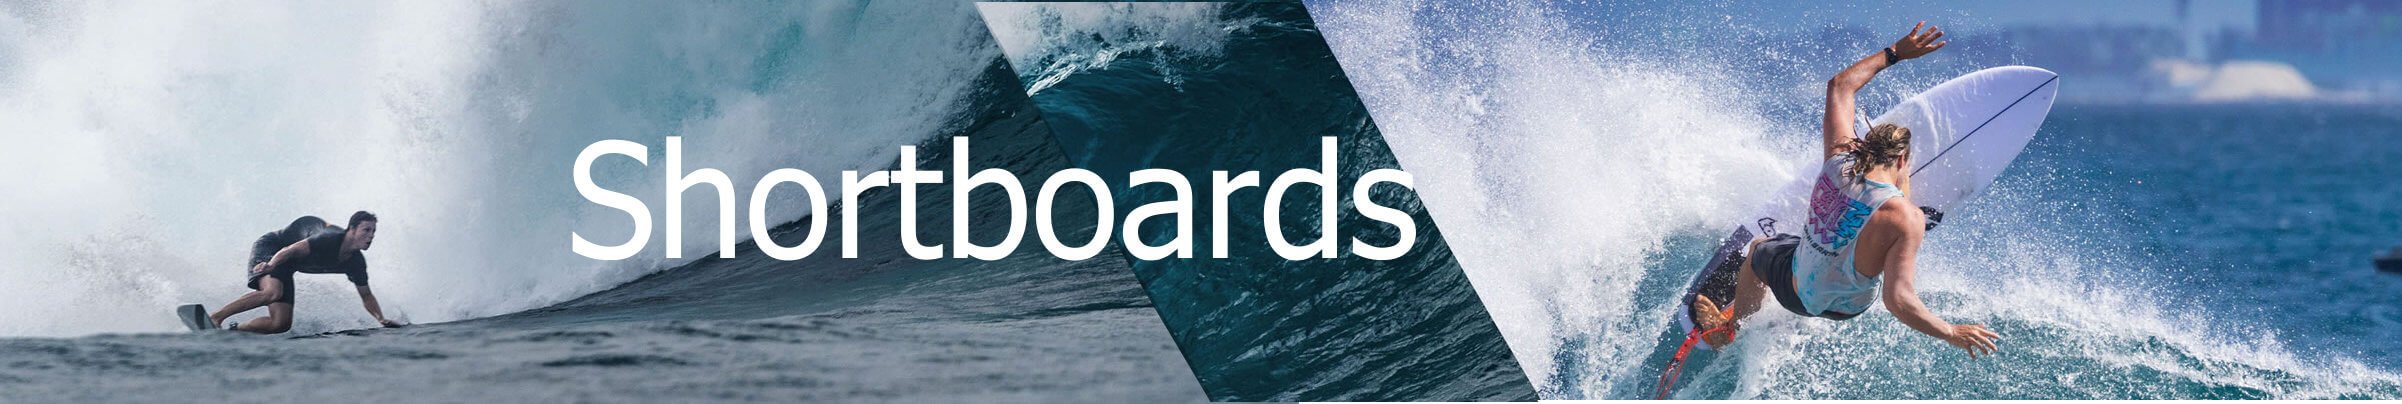 Shortboard kaufen - High Performance Surfboards Banner